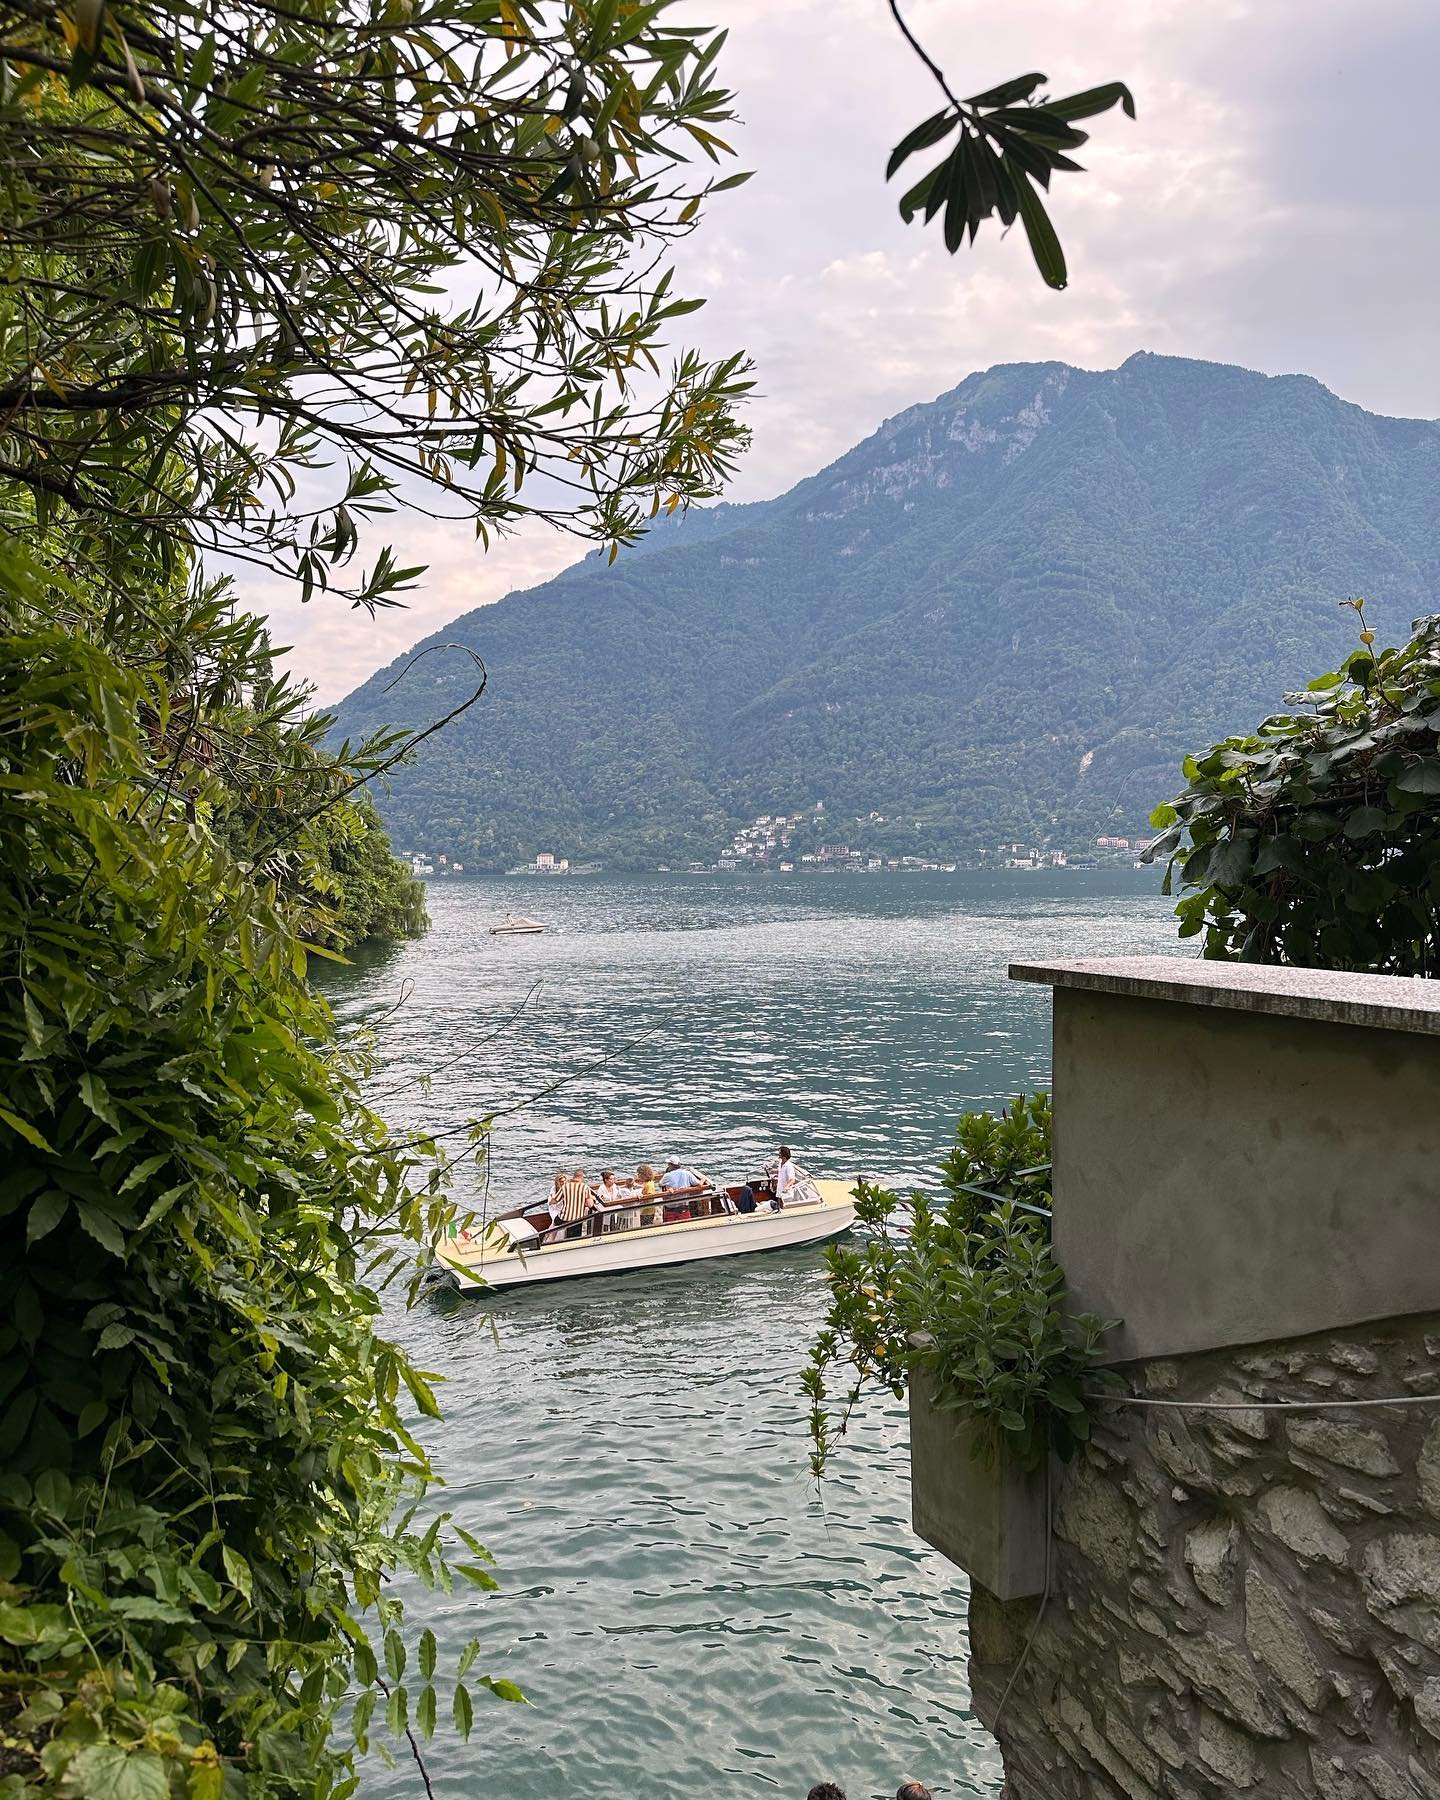 Next series coming up, Lago Di Como! #backtoblue #ariellechristineart